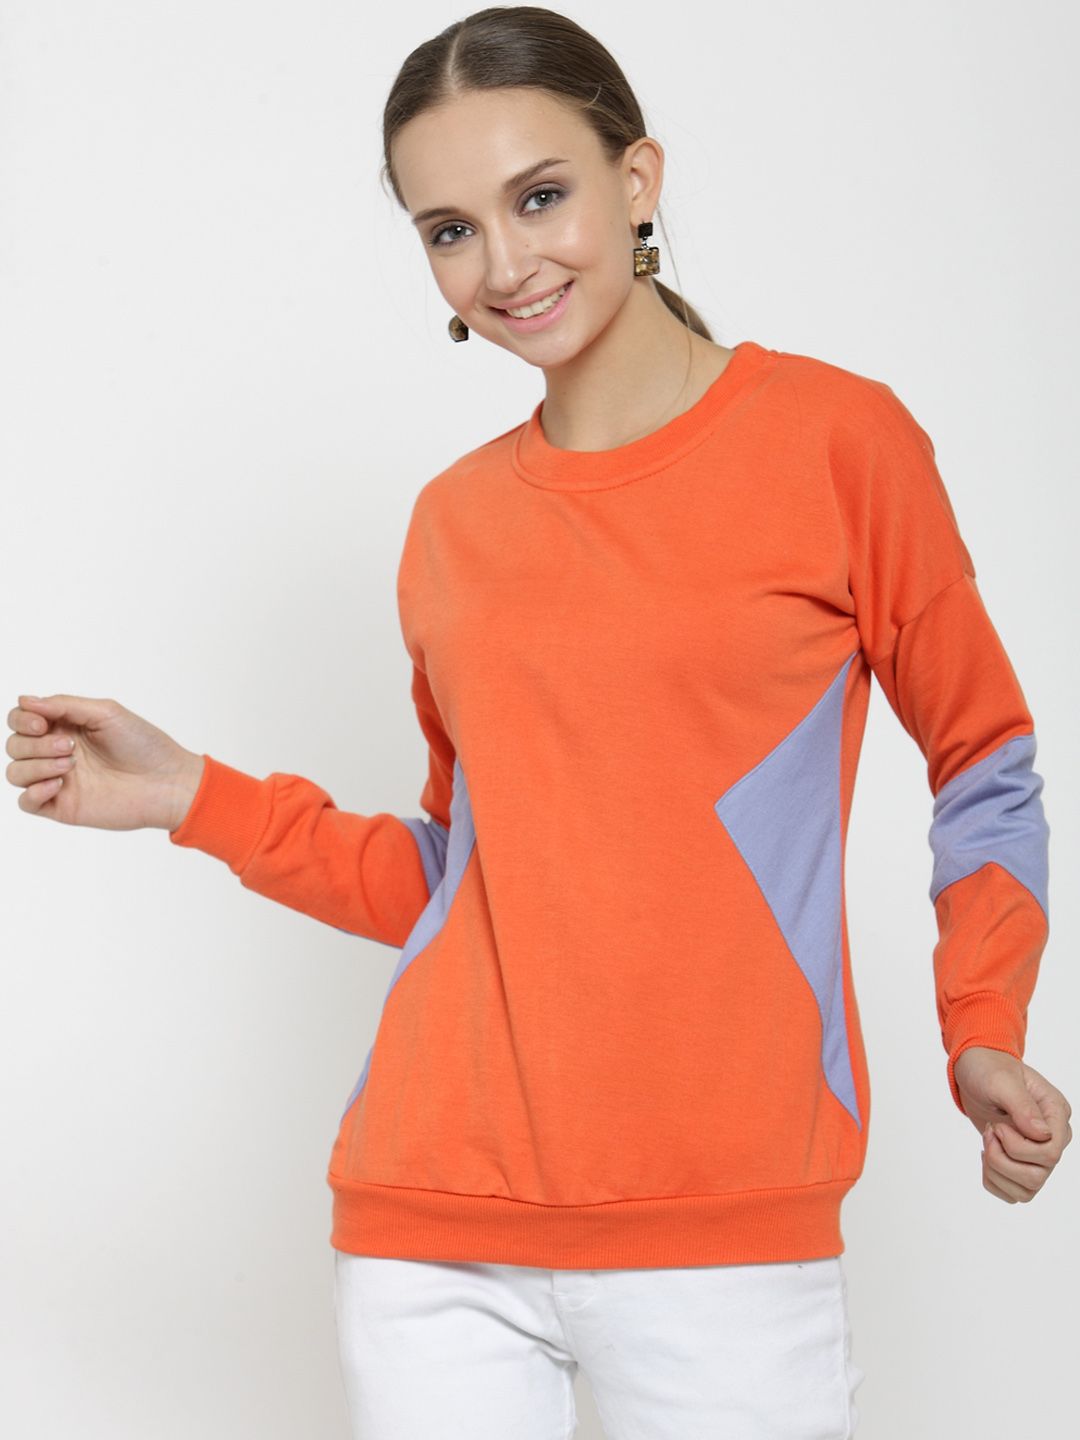 Belle Fille Women Orange & Blue Colourblocked Sweatshirt Price in India